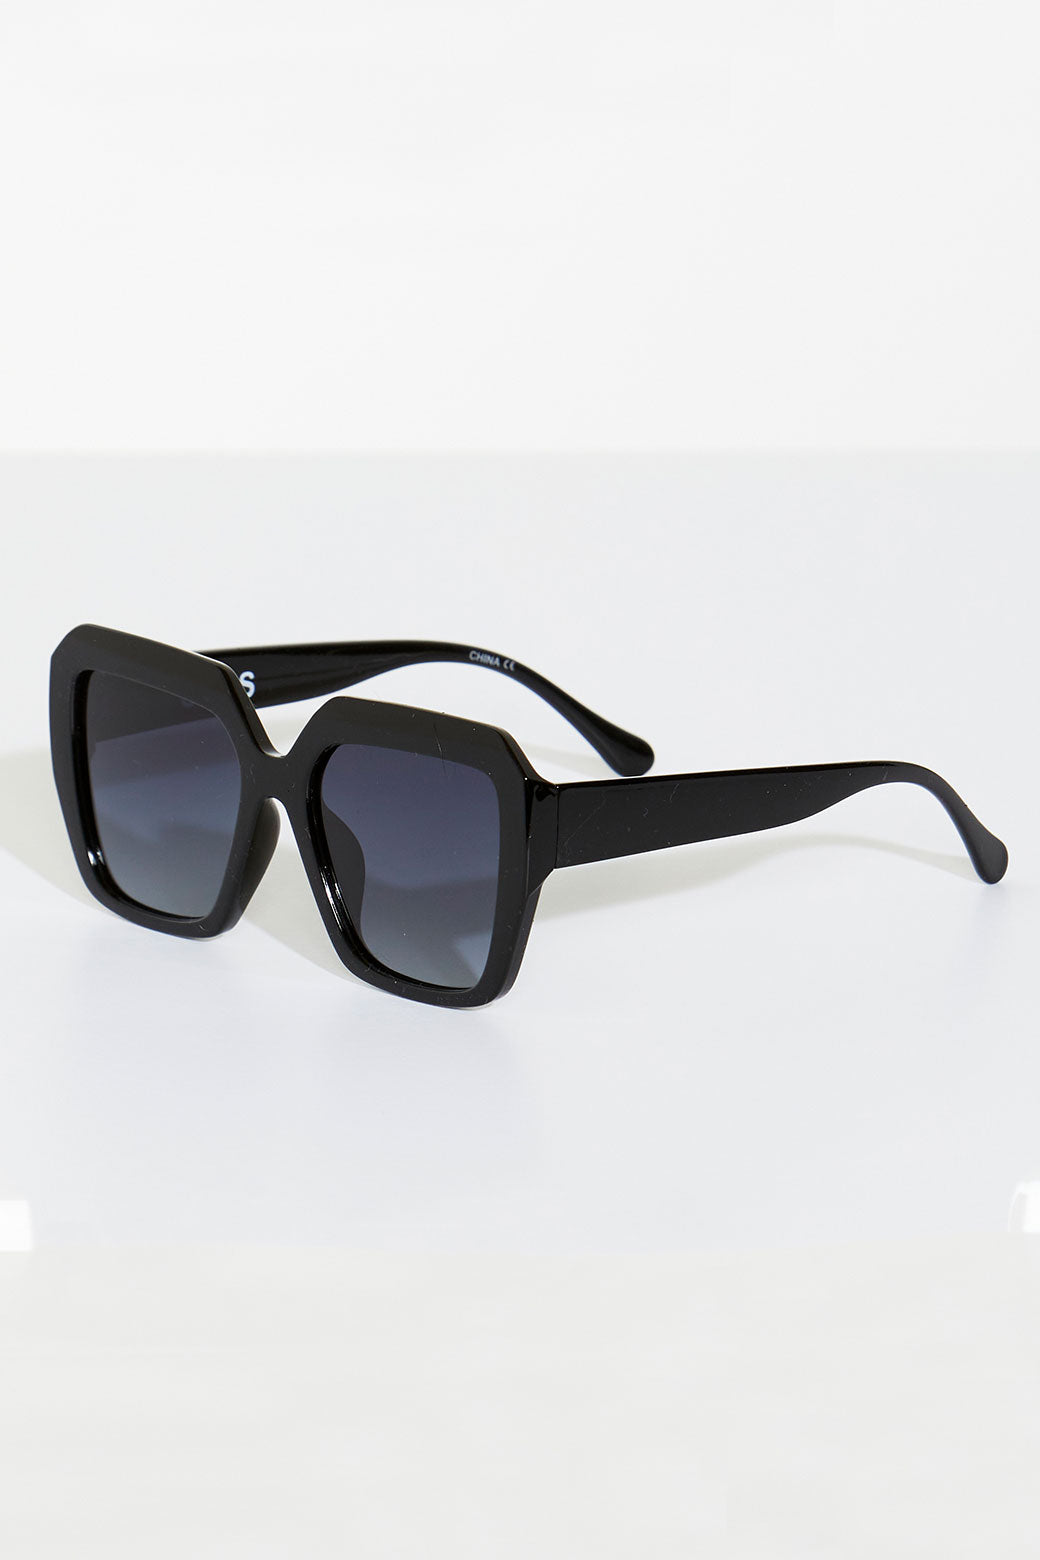 Sass Carni Sunglasses Black